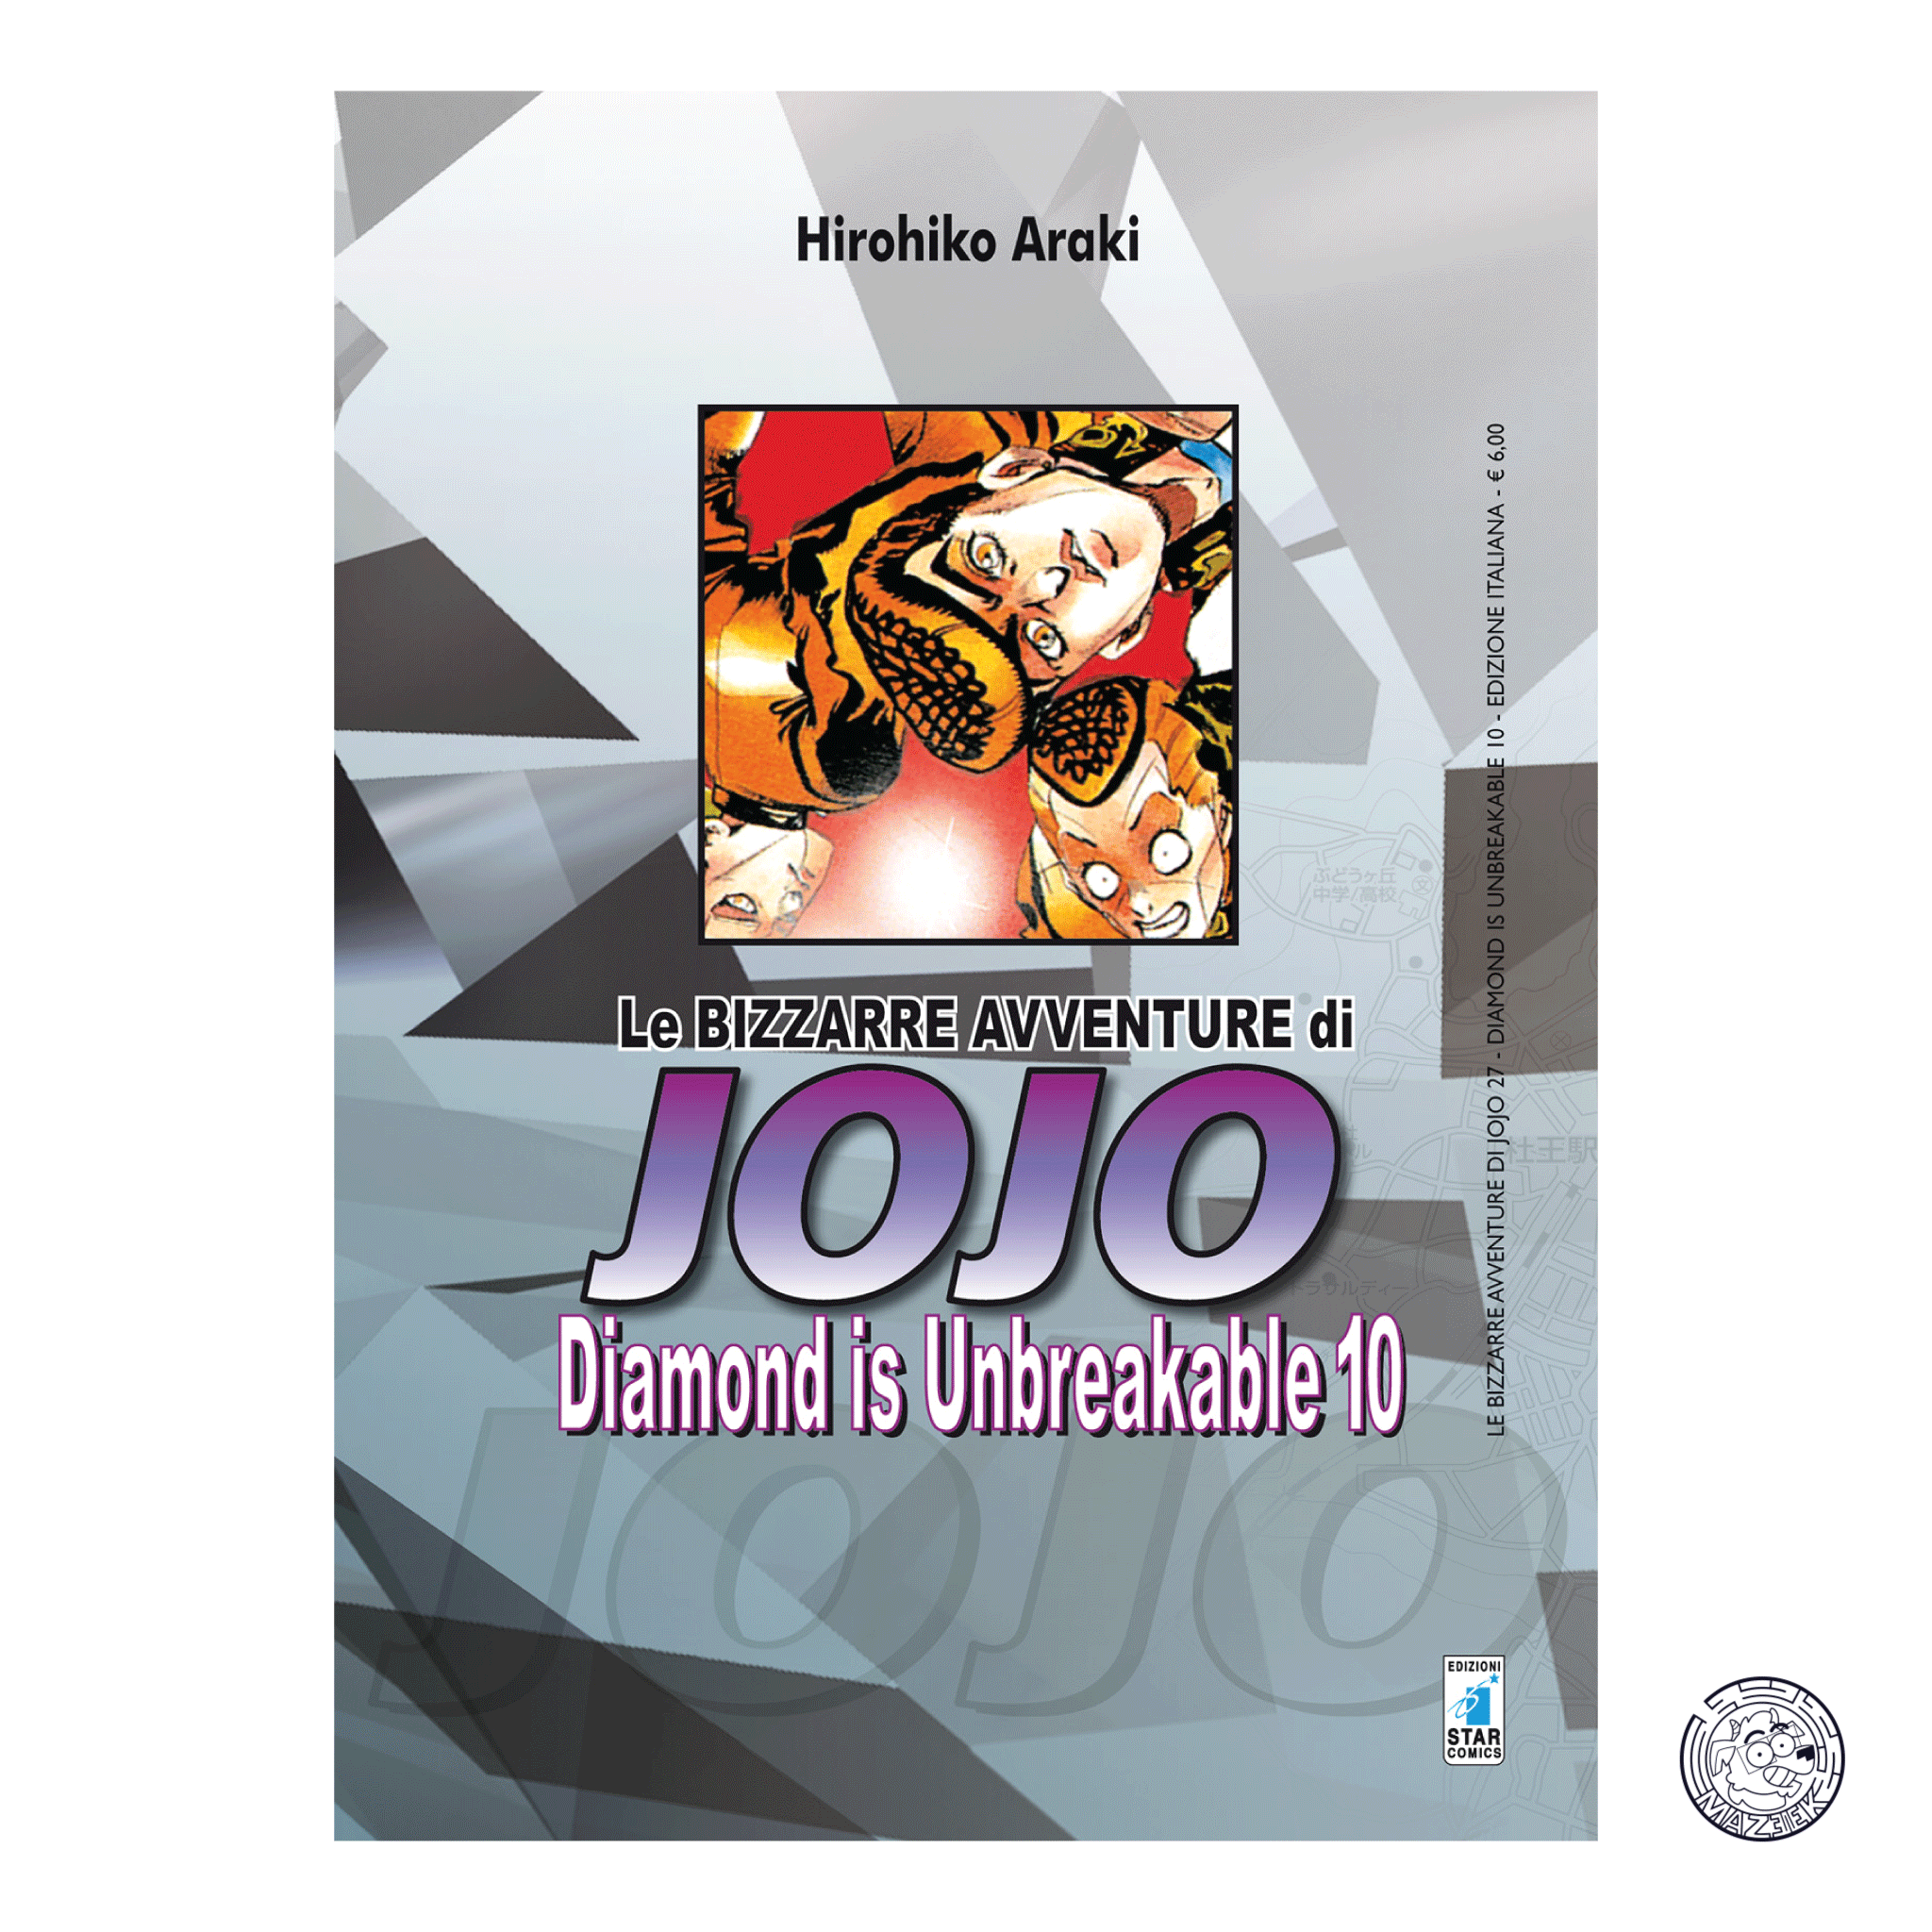 Le Bizzarre Avventure di Jojo: Diamond Is Unbreakeable 10